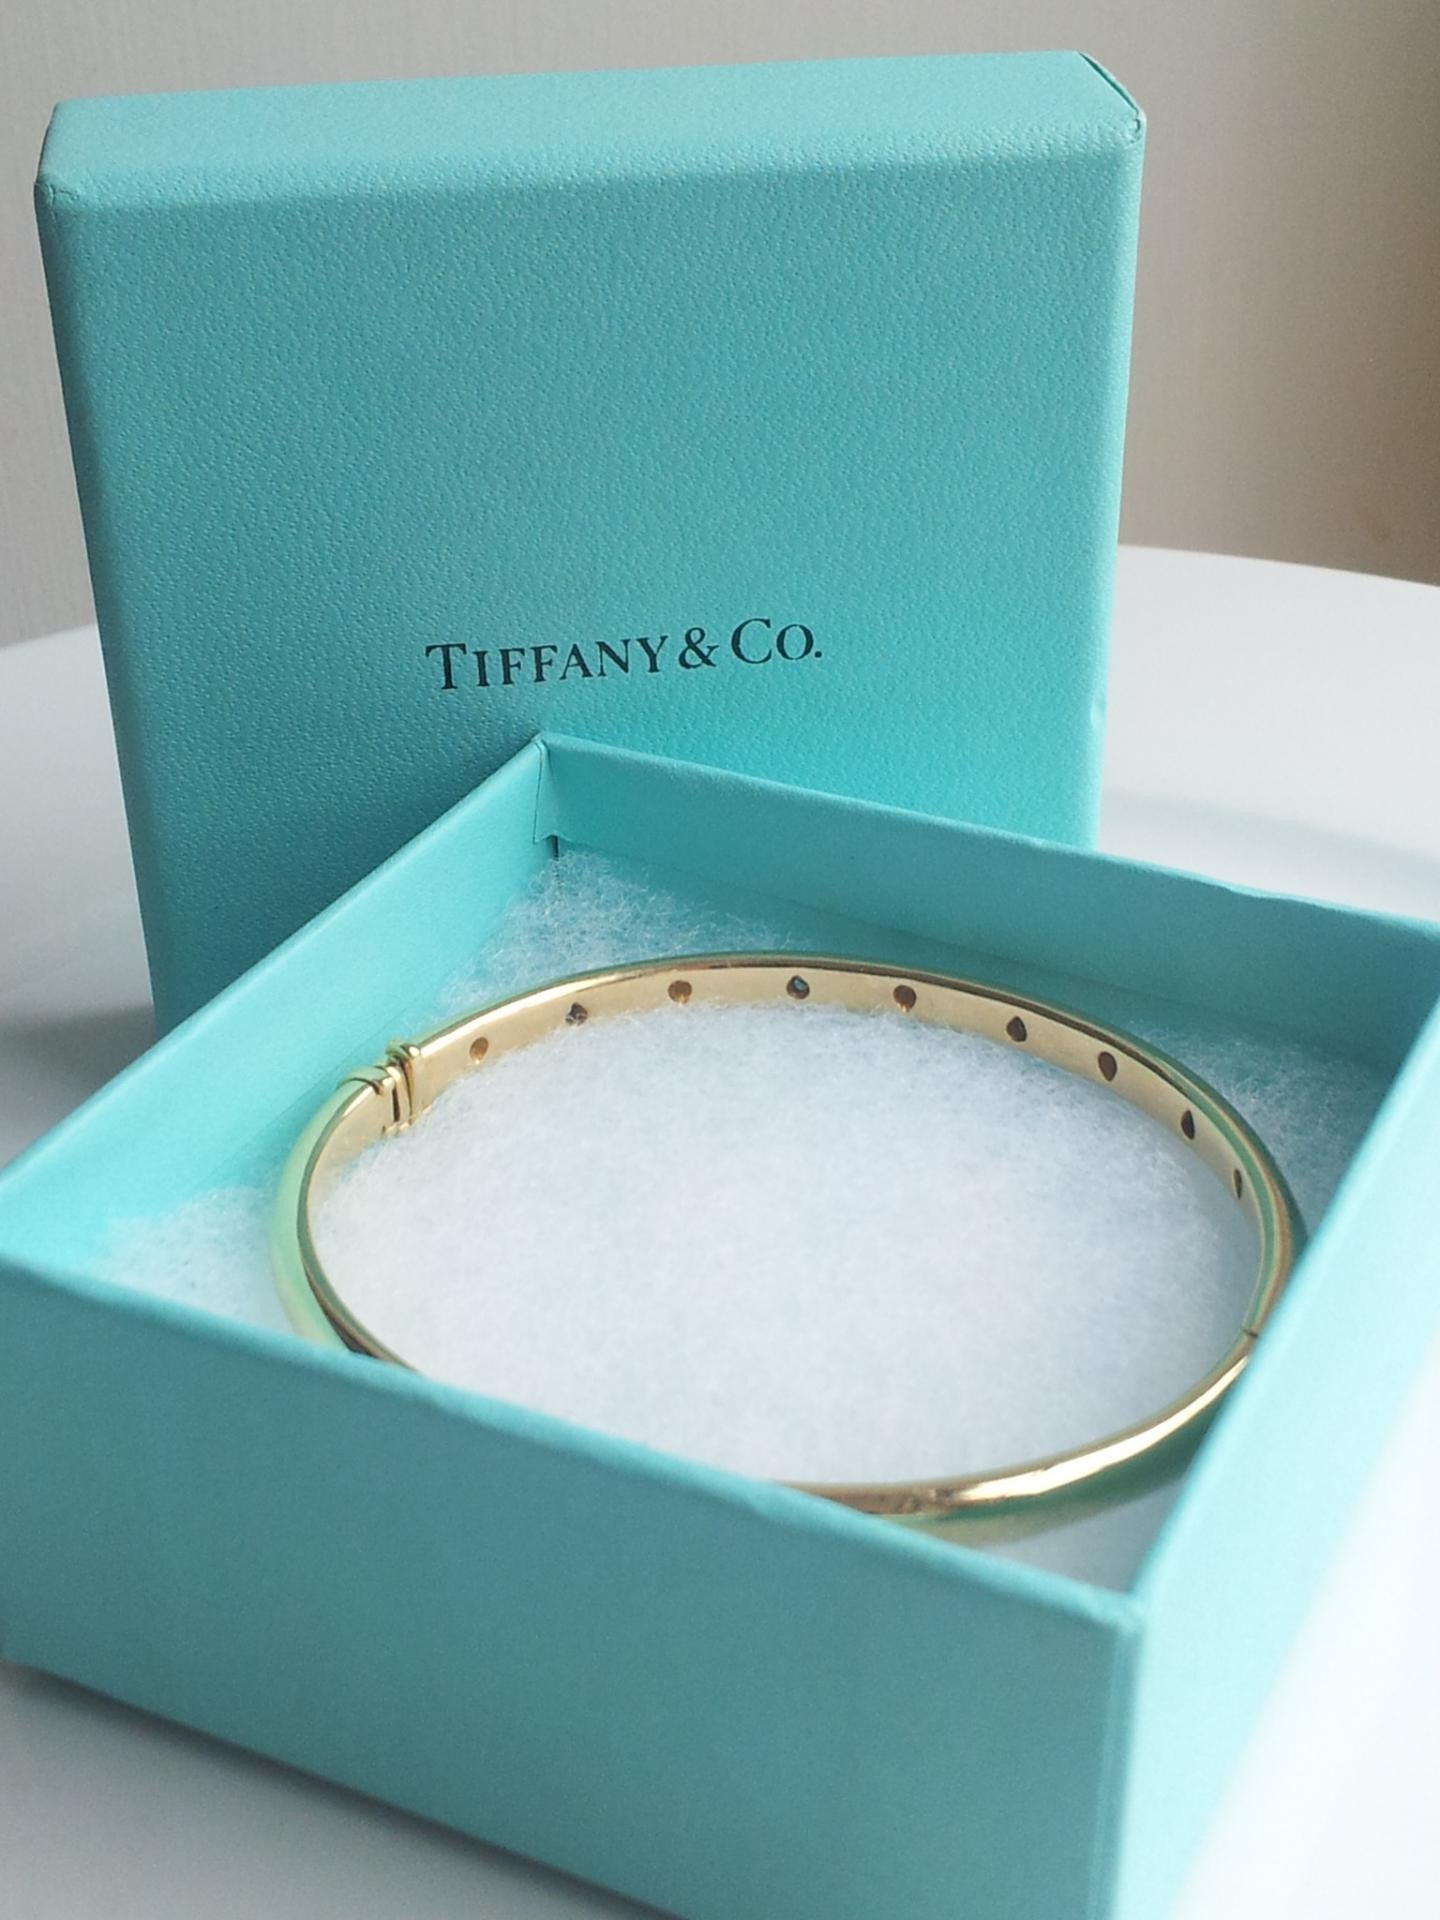 Tiffany & Co. 'Etoile' Diamond Bangle / Bracelet, in 18K Gold & Platinum